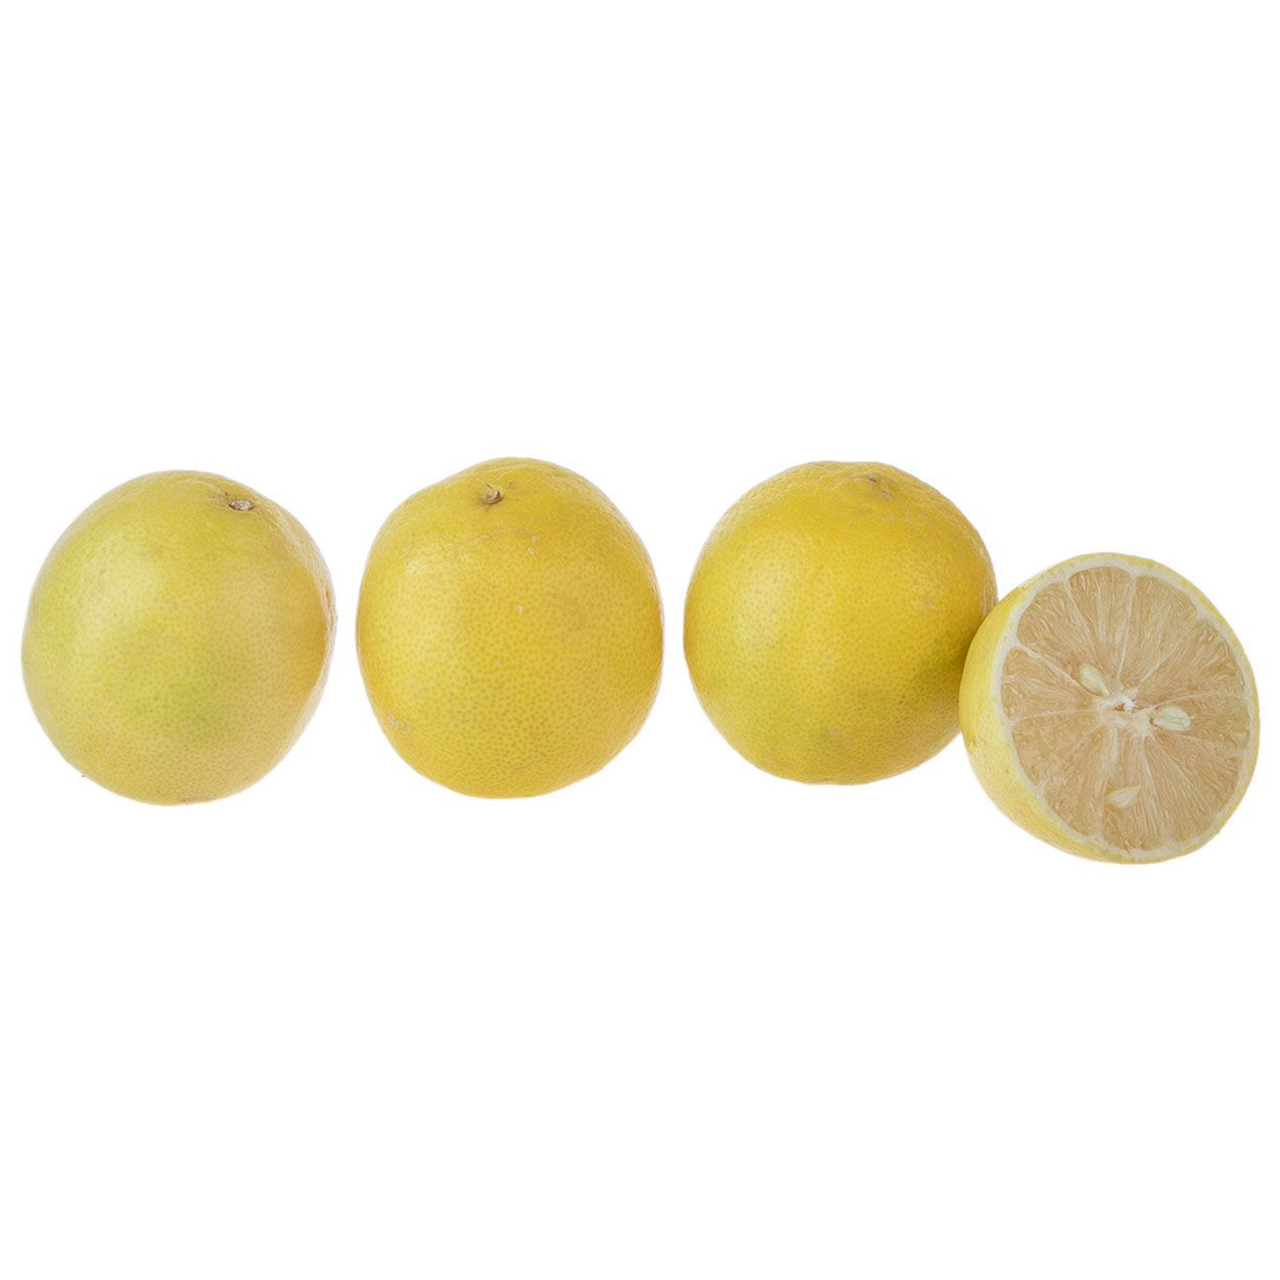 لیمو شیرین - 1 کیلوگرم (حداقل 4 عدد)